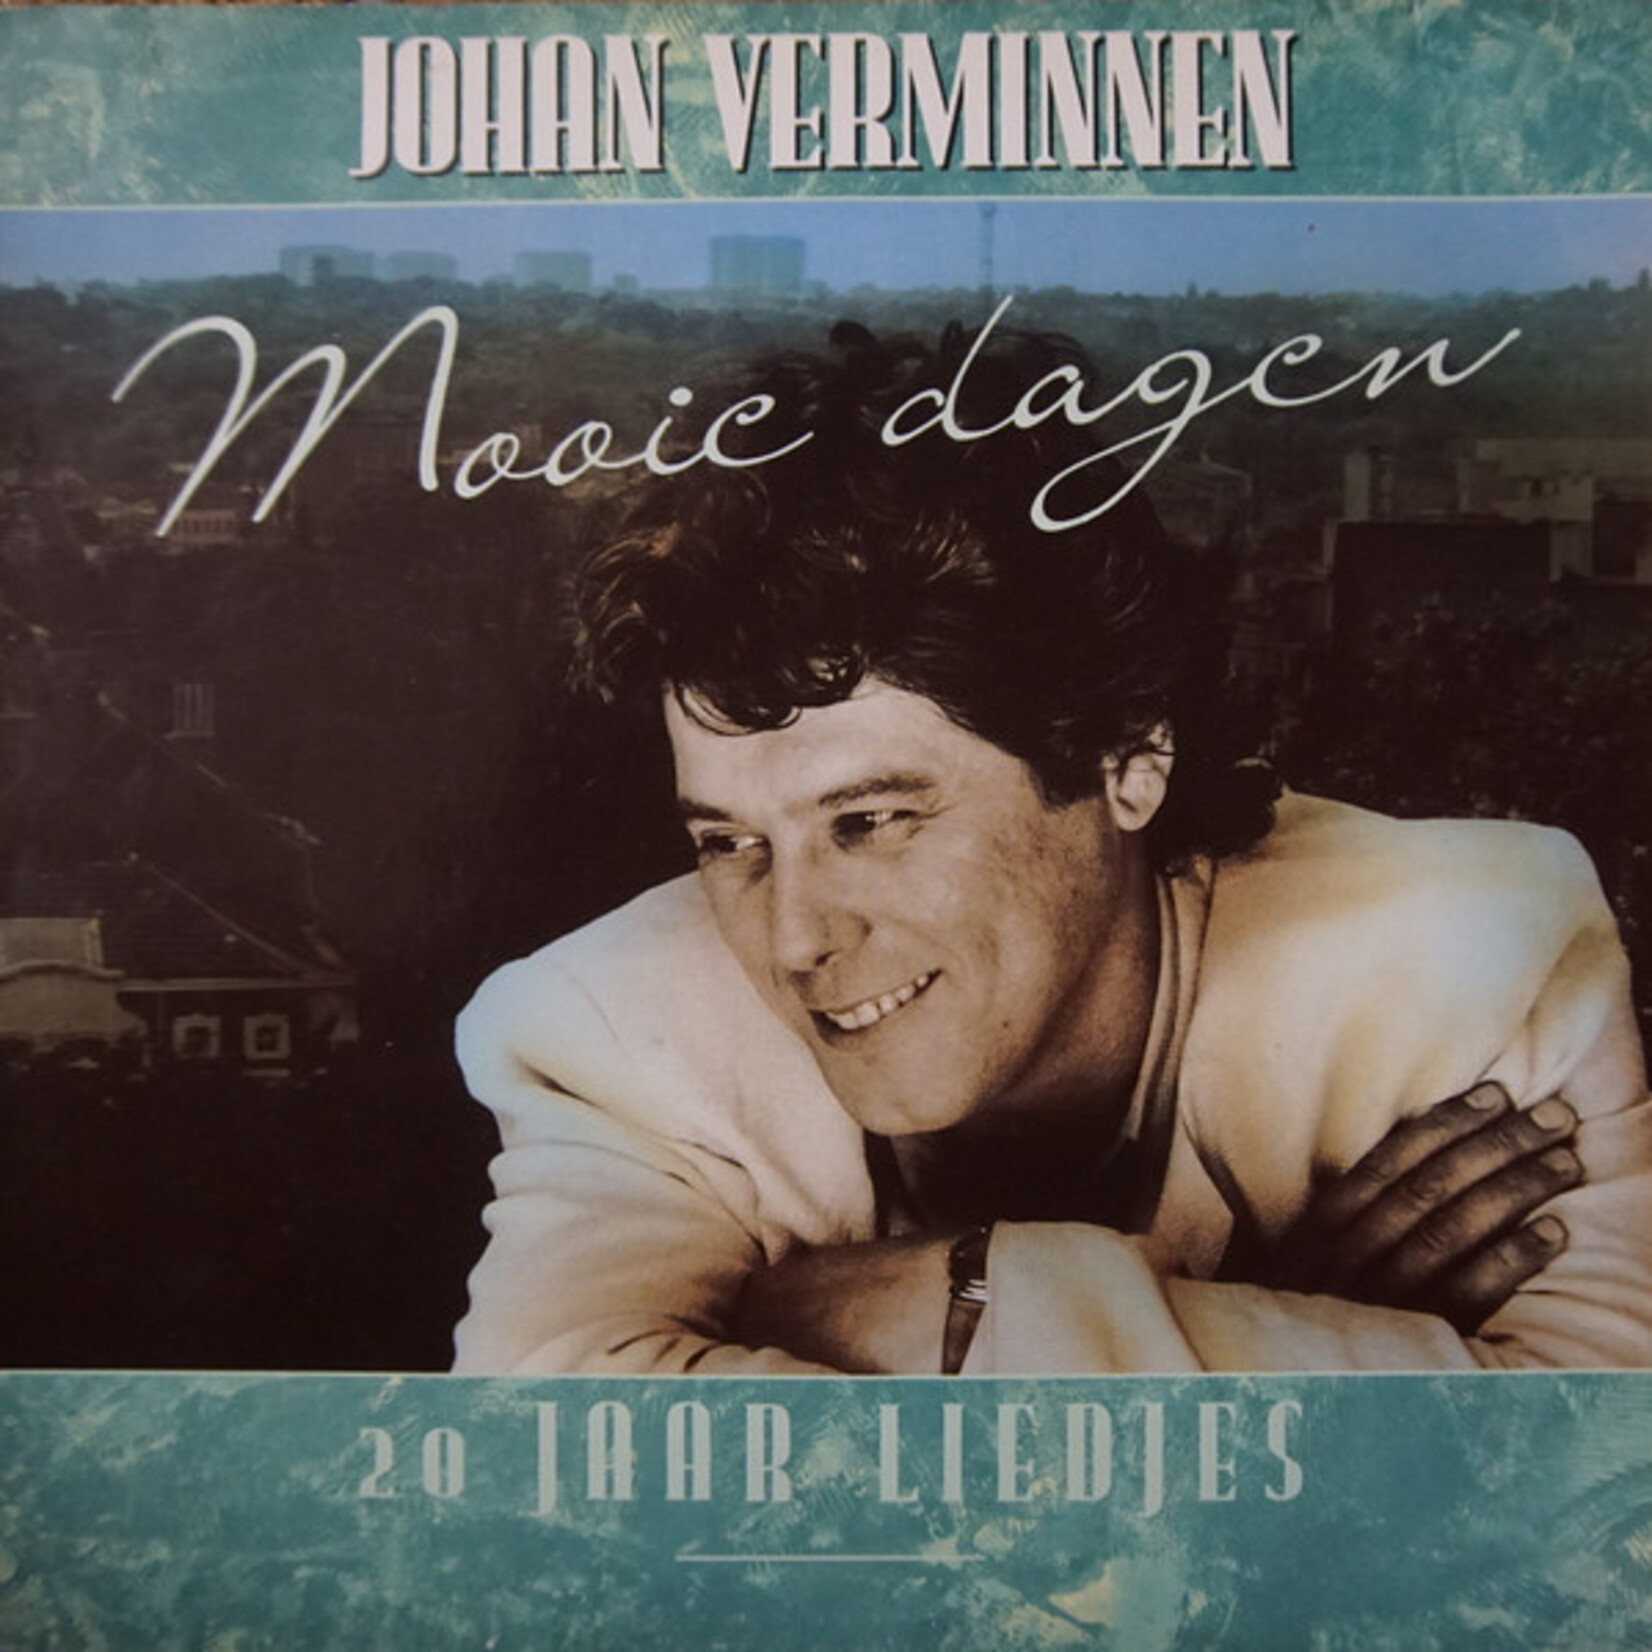 Johan Verminnen – Mooie Dagen - 20 Jaar Liedjes LP